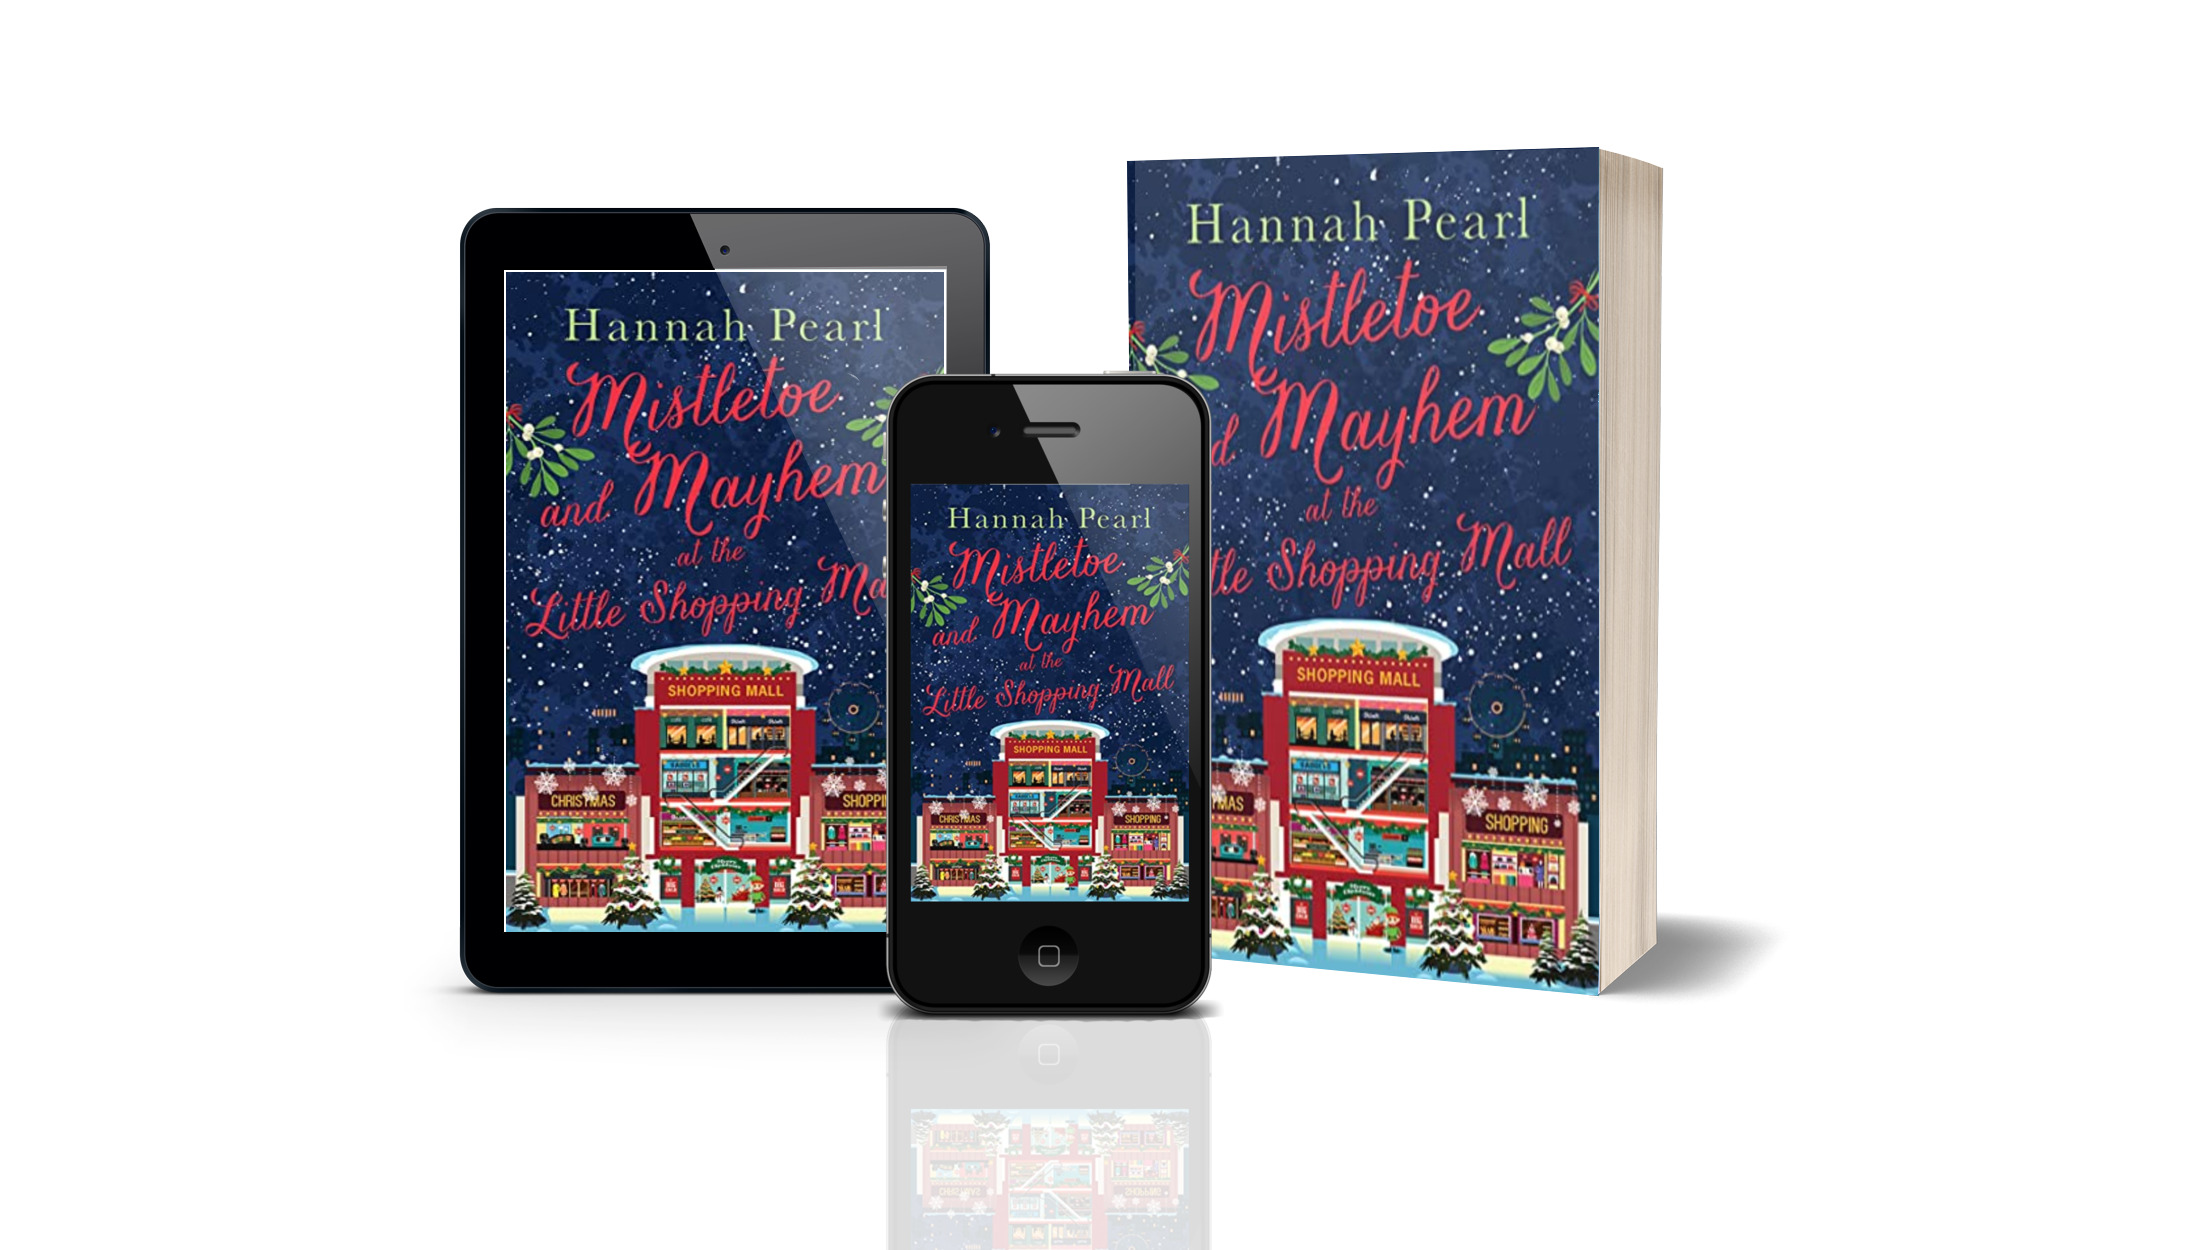 Hannah Pearl – Mistletoe and Mayhem at the Little Shopping Mall